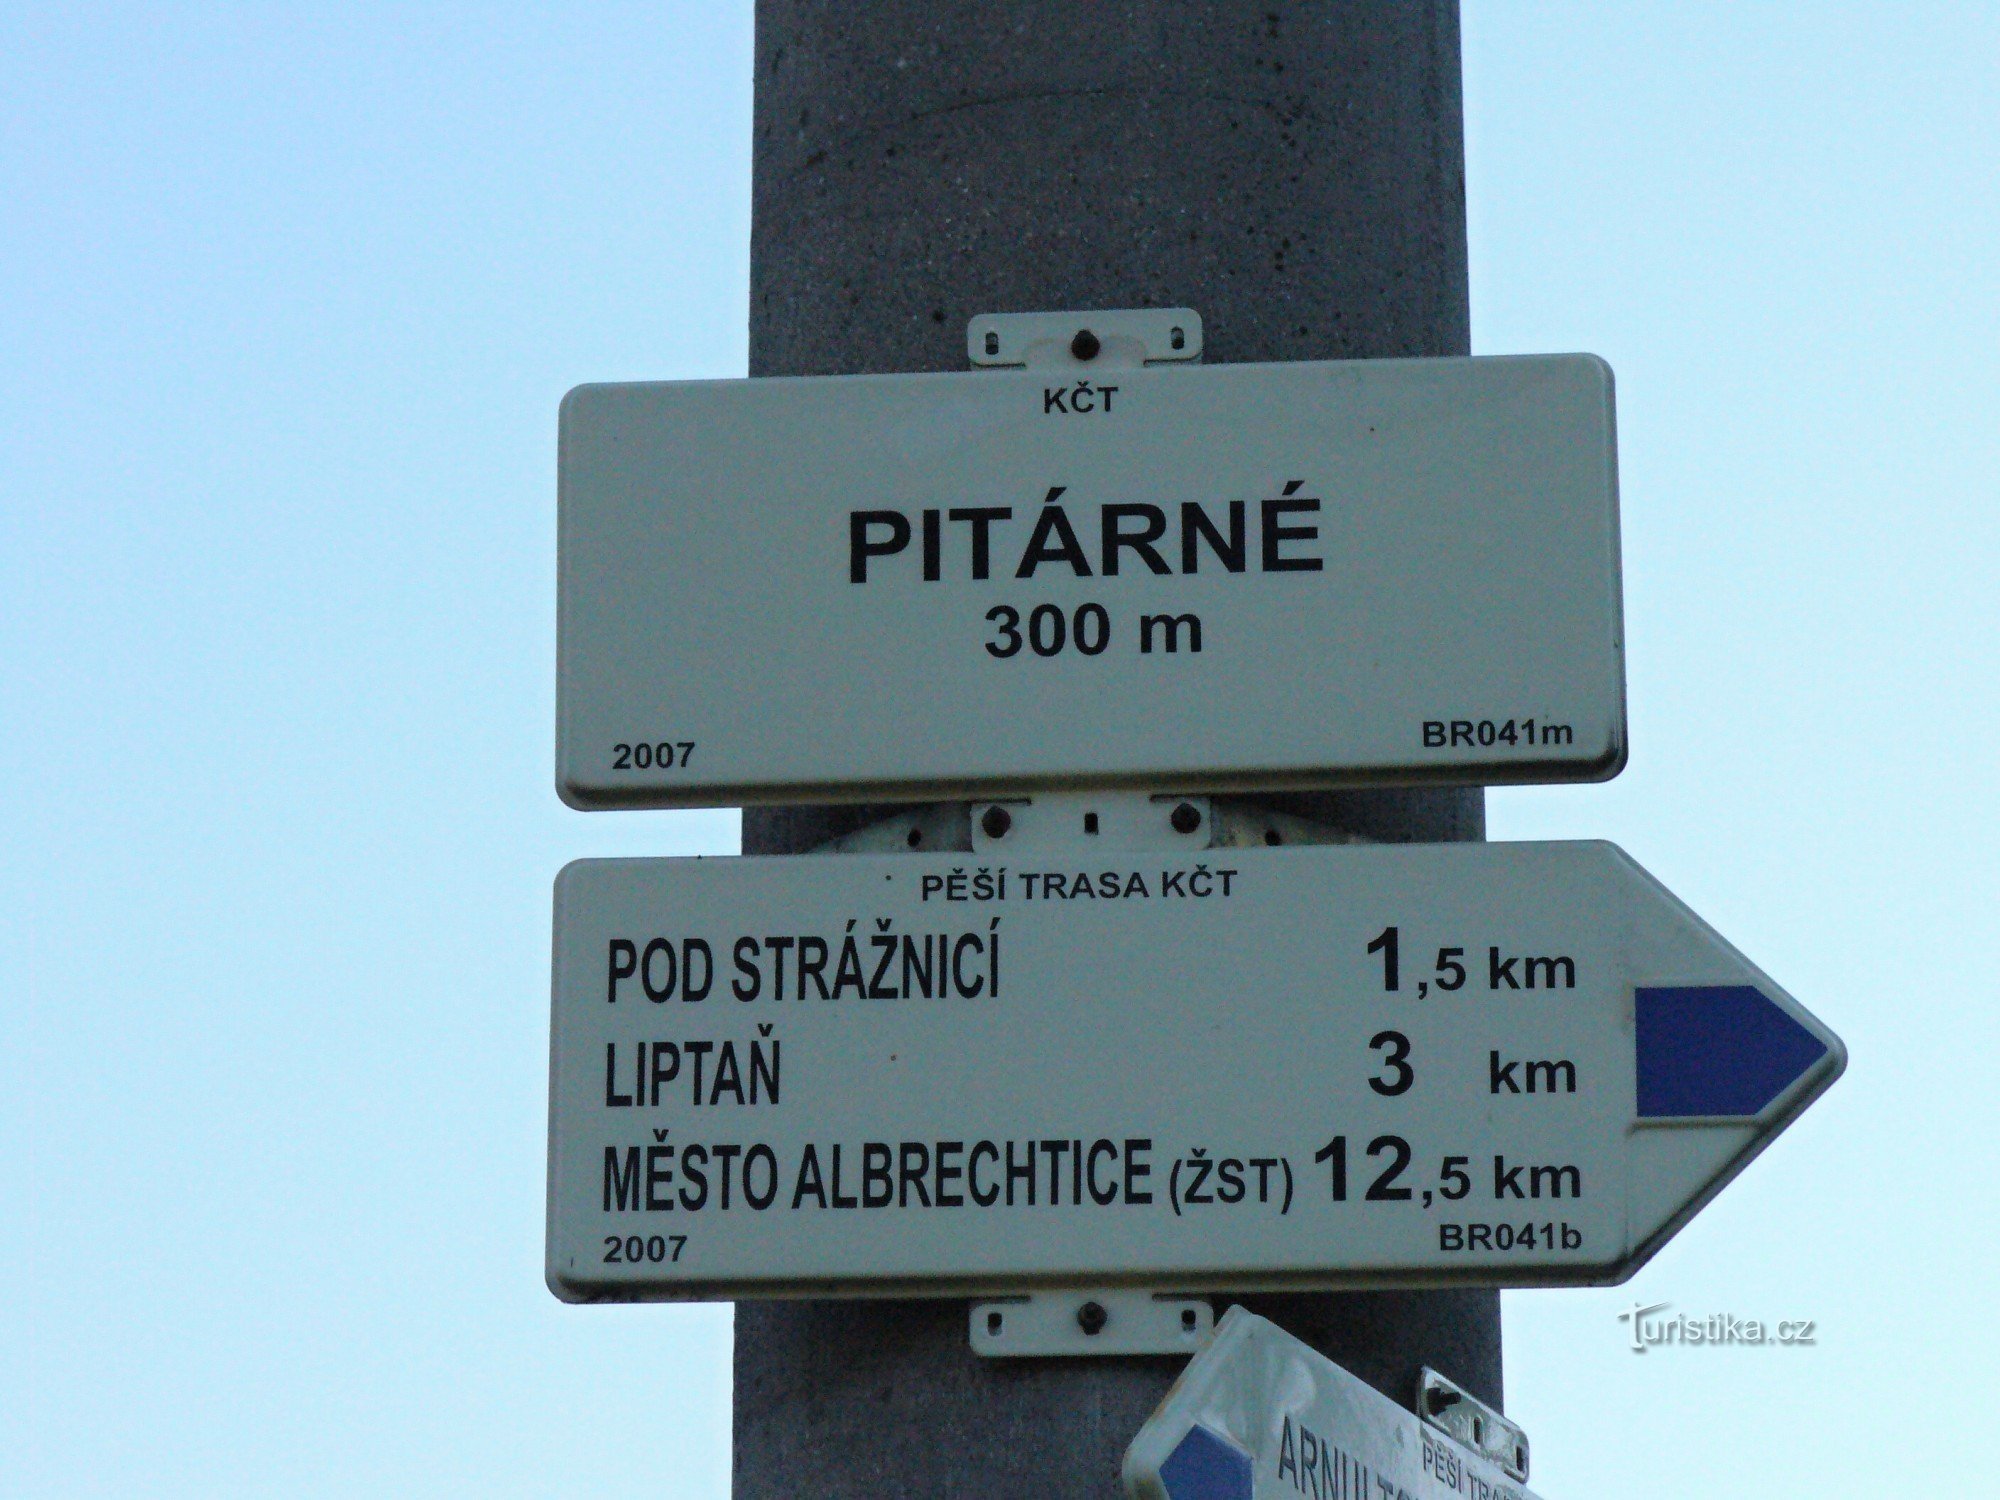 Starting point - Pitárné